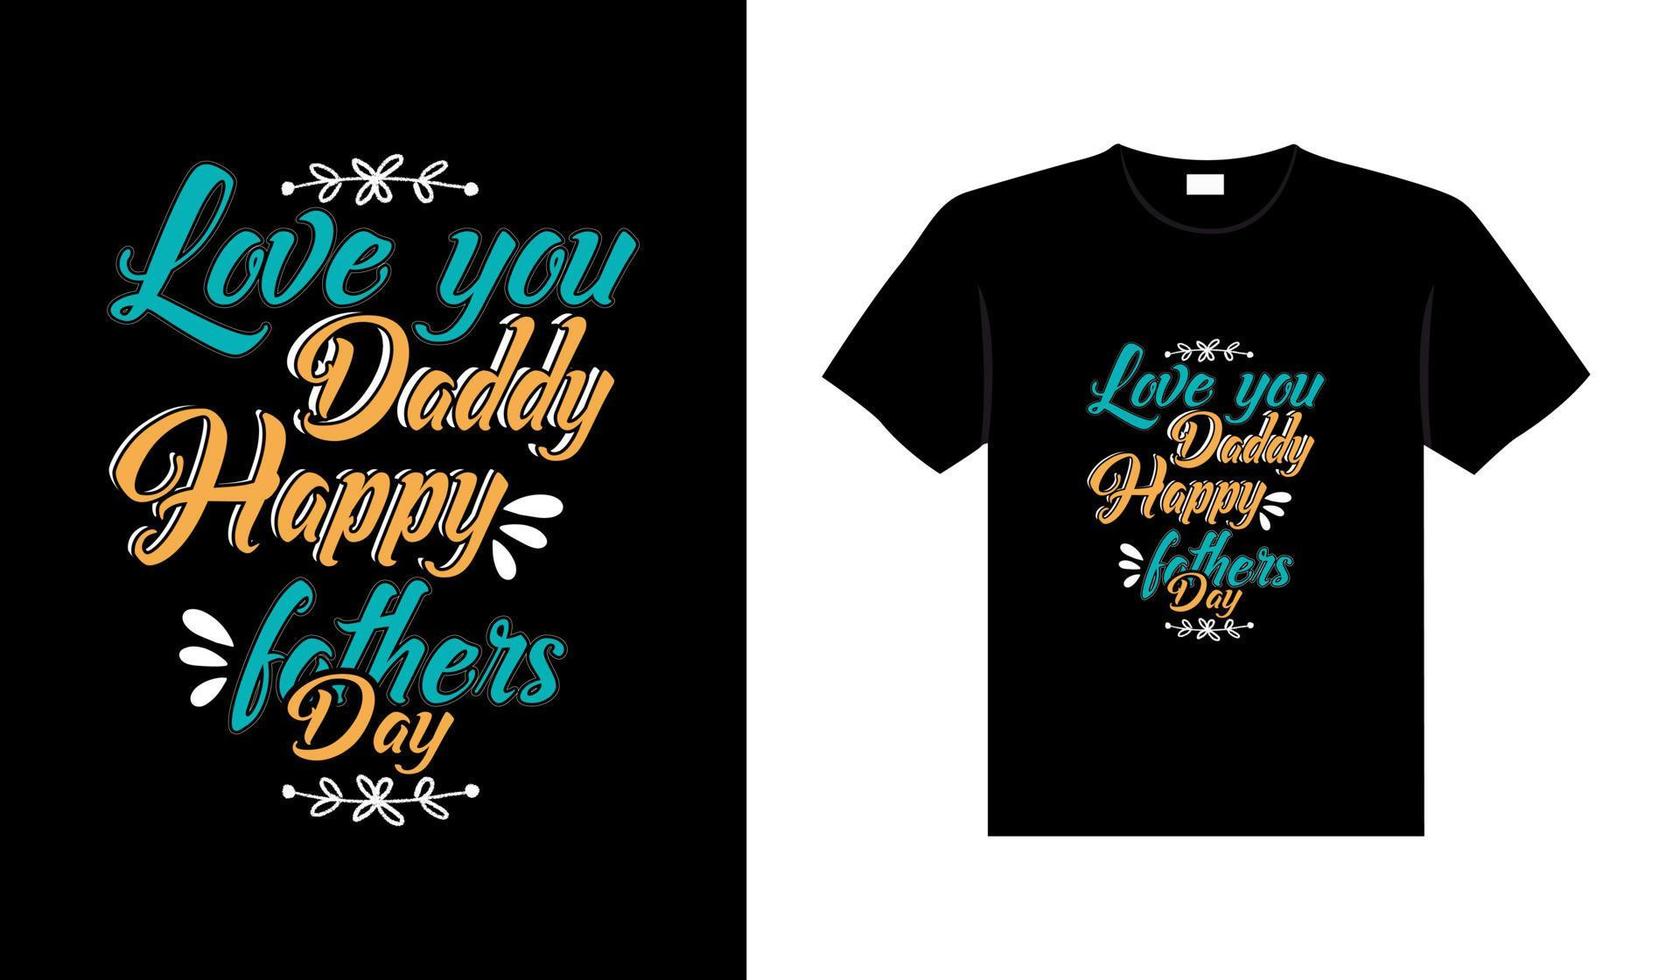 papá familia diseño de camiseta letras tipografía citas relación diseño de mercancías vector